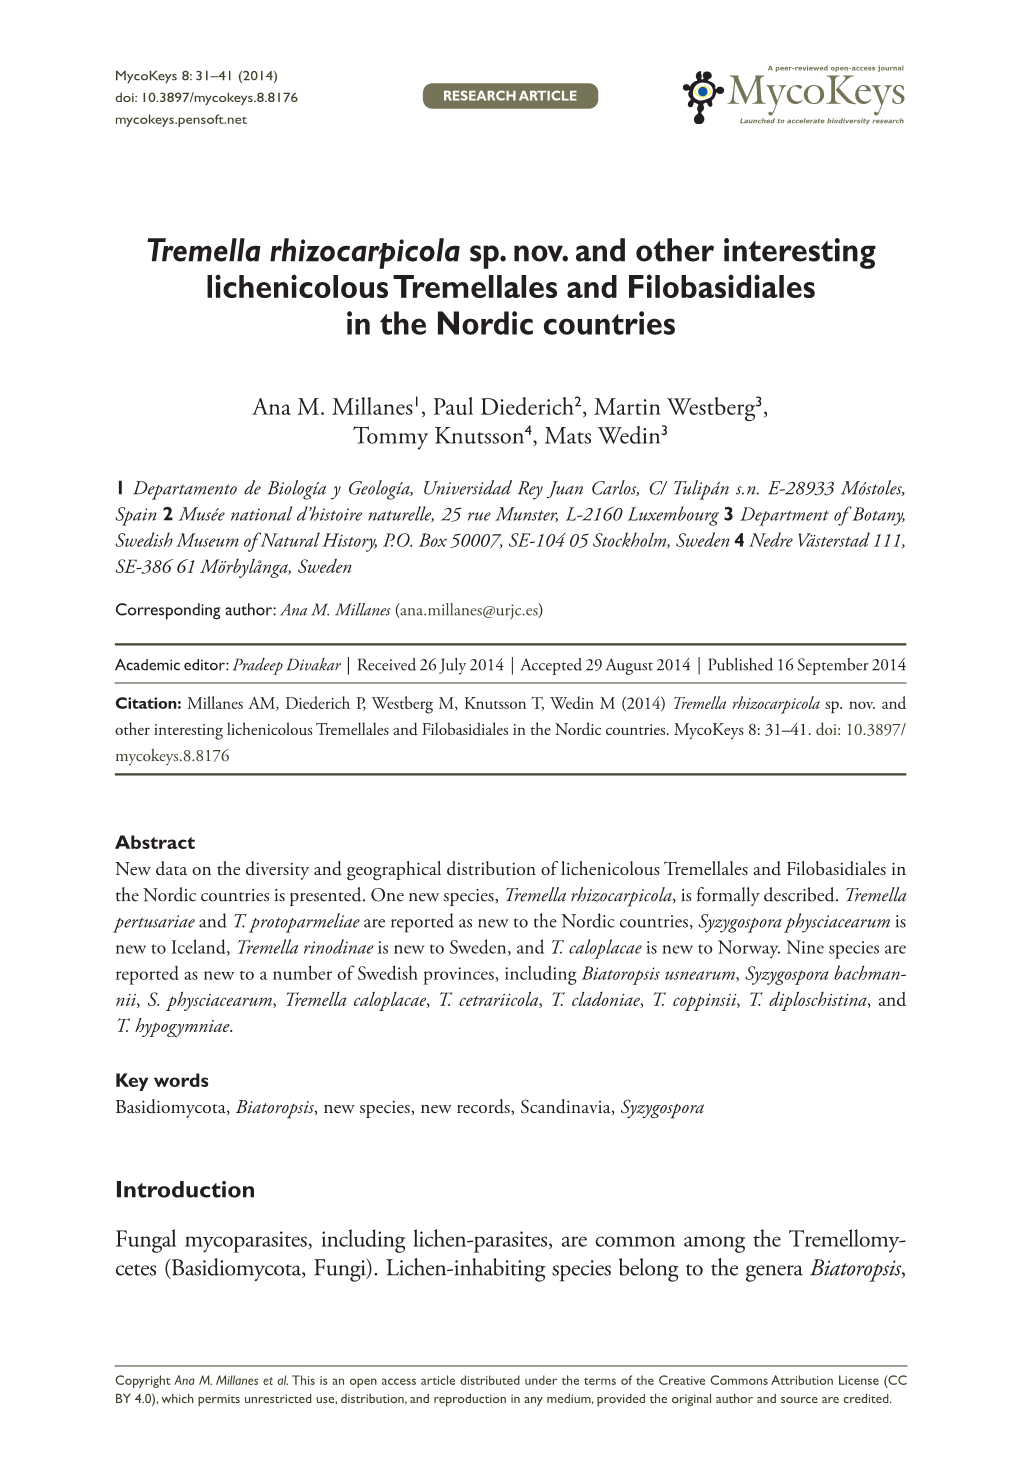 Tremella Rhizocarpicola Sp. Nov. and Other Interesting Lichenicolous Tremellales and Filobasidiales in the Nordic Countries